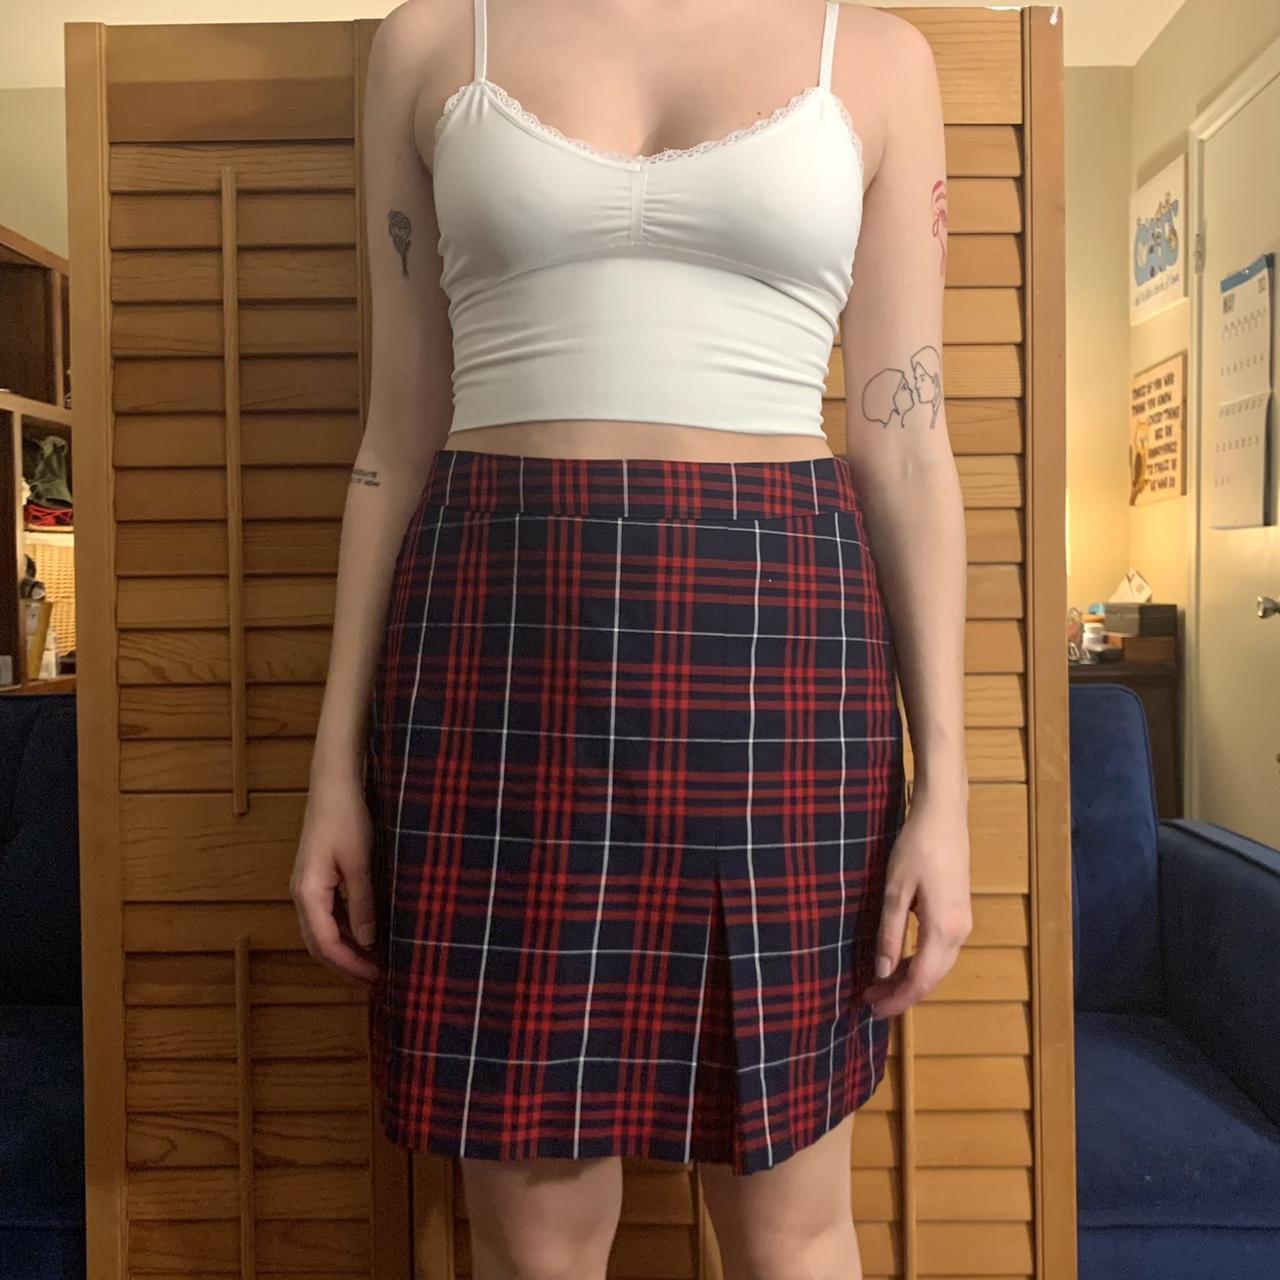 Vintage plaid schoolgirl mini skirt by Parker! Made... - Depop